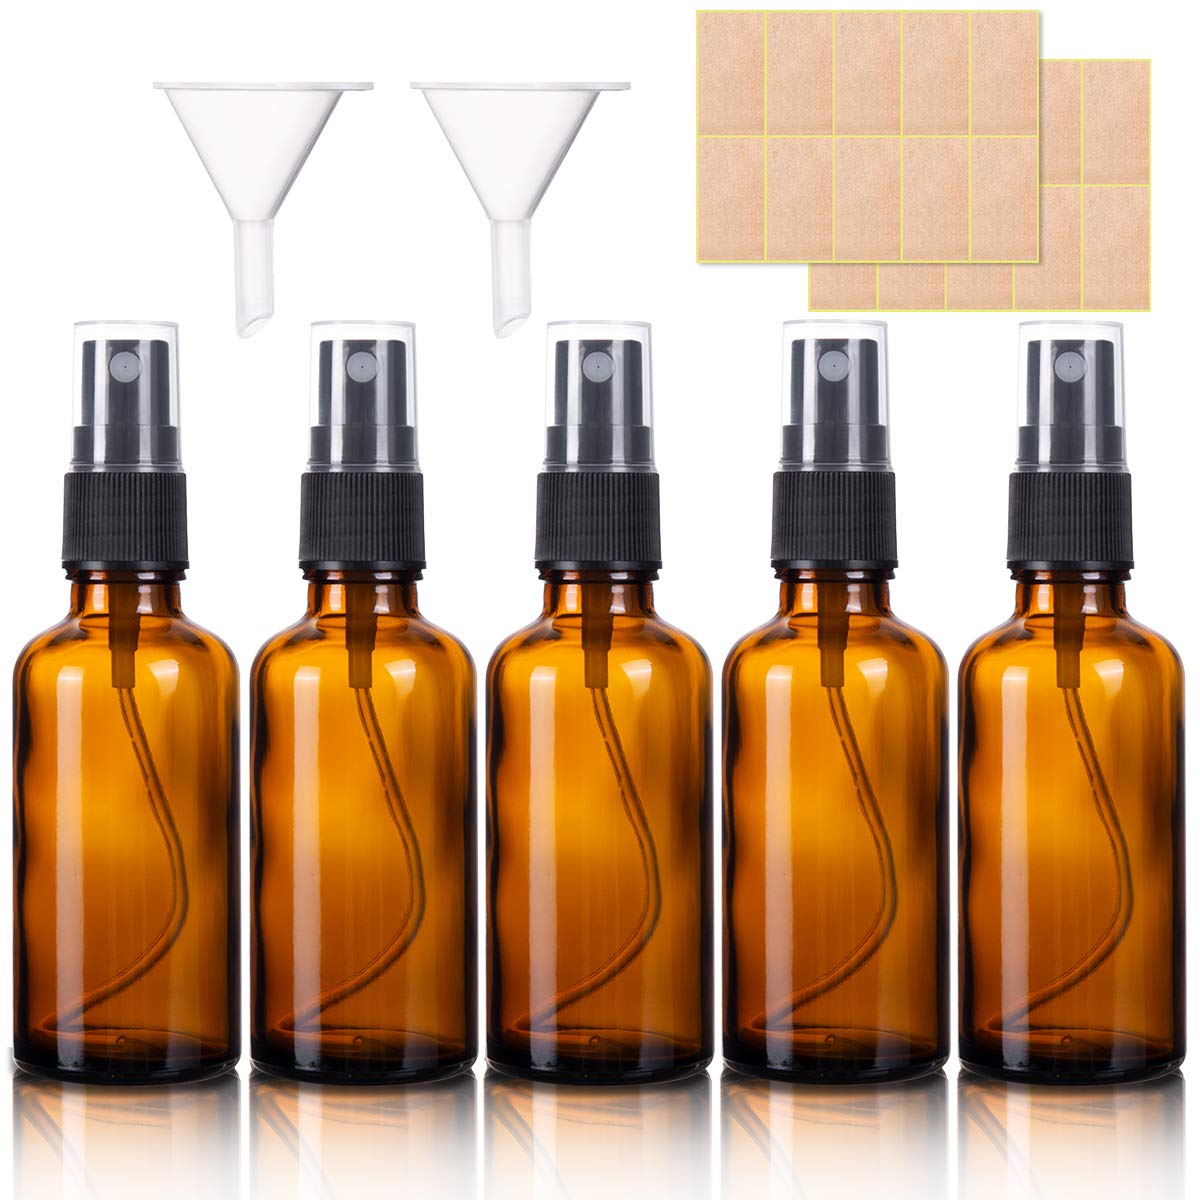 5 Pack Amber Glass Spray Bottles, 50ML Empty Fine Mist Spray Bottle for Cleaning, Perfume, Cosmetic Sprays